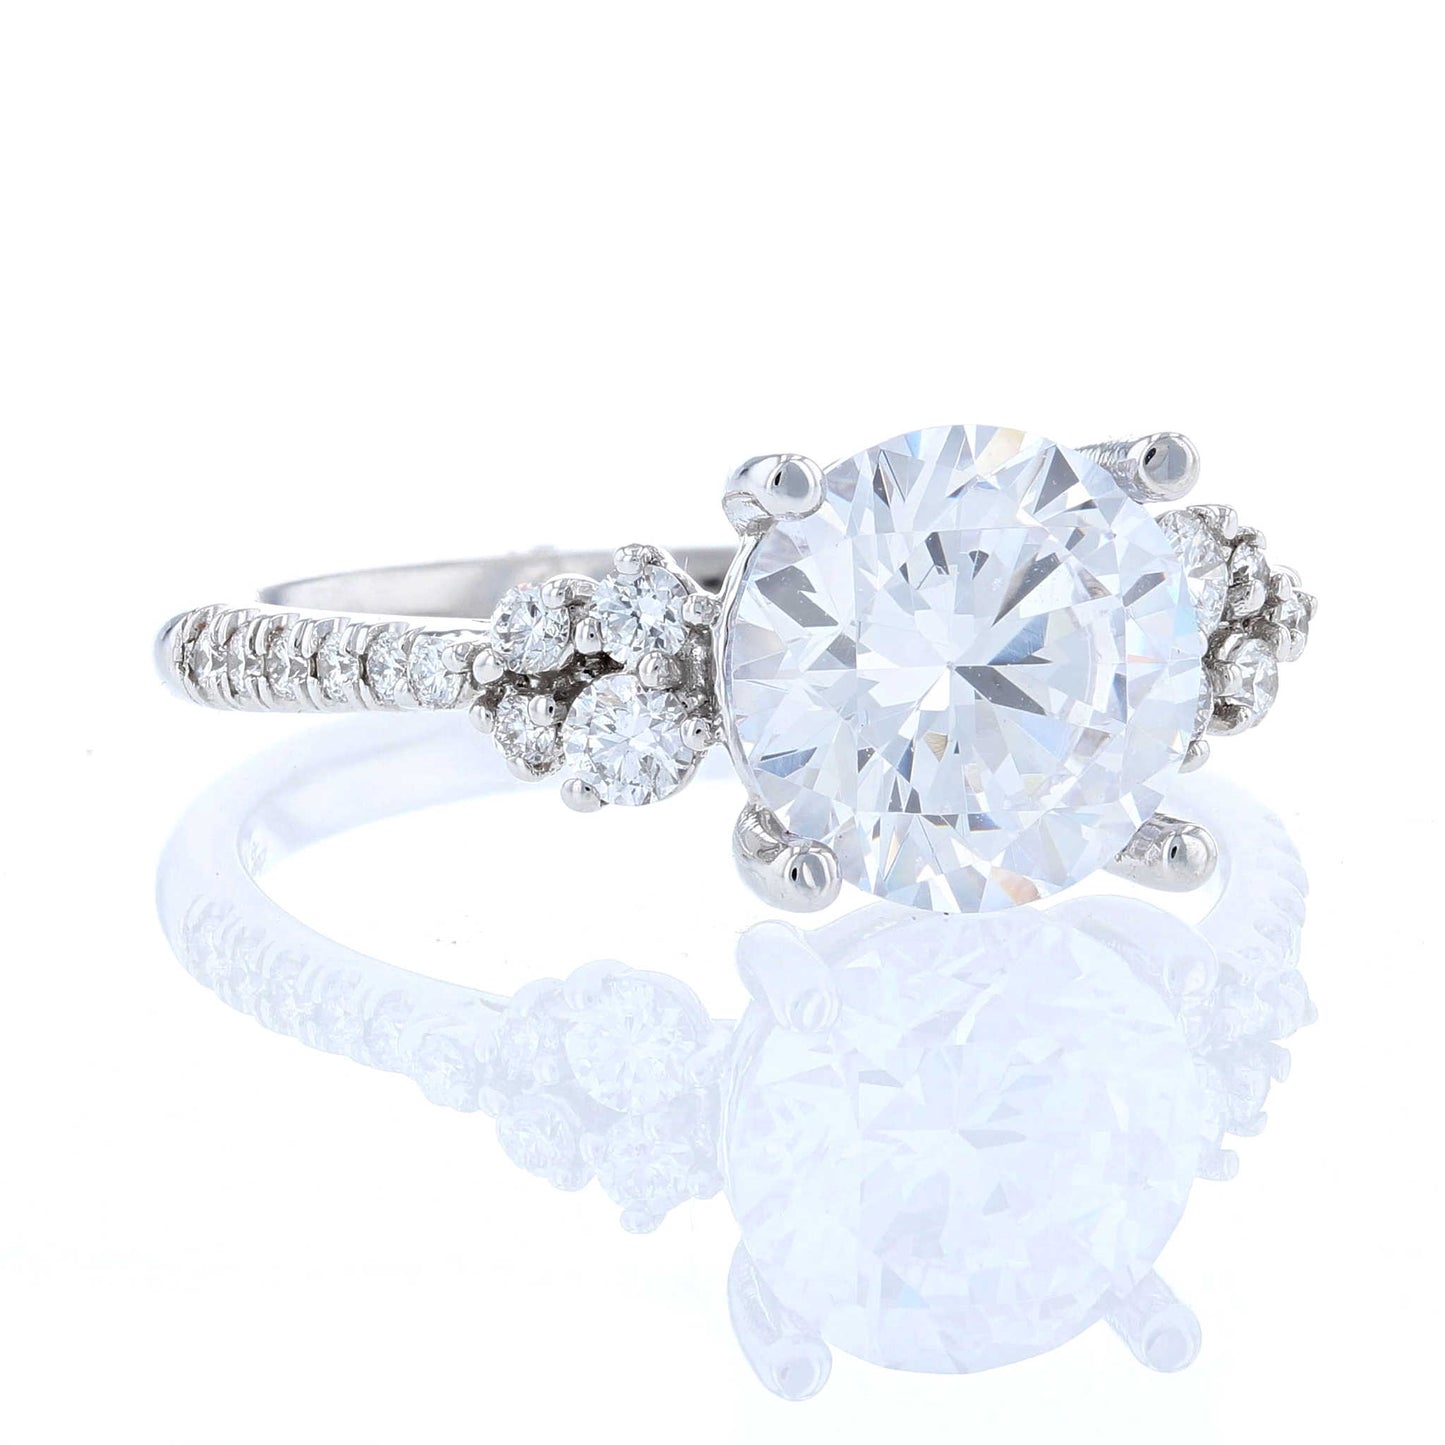 Graduated Cluster Diamond Engagement Ring